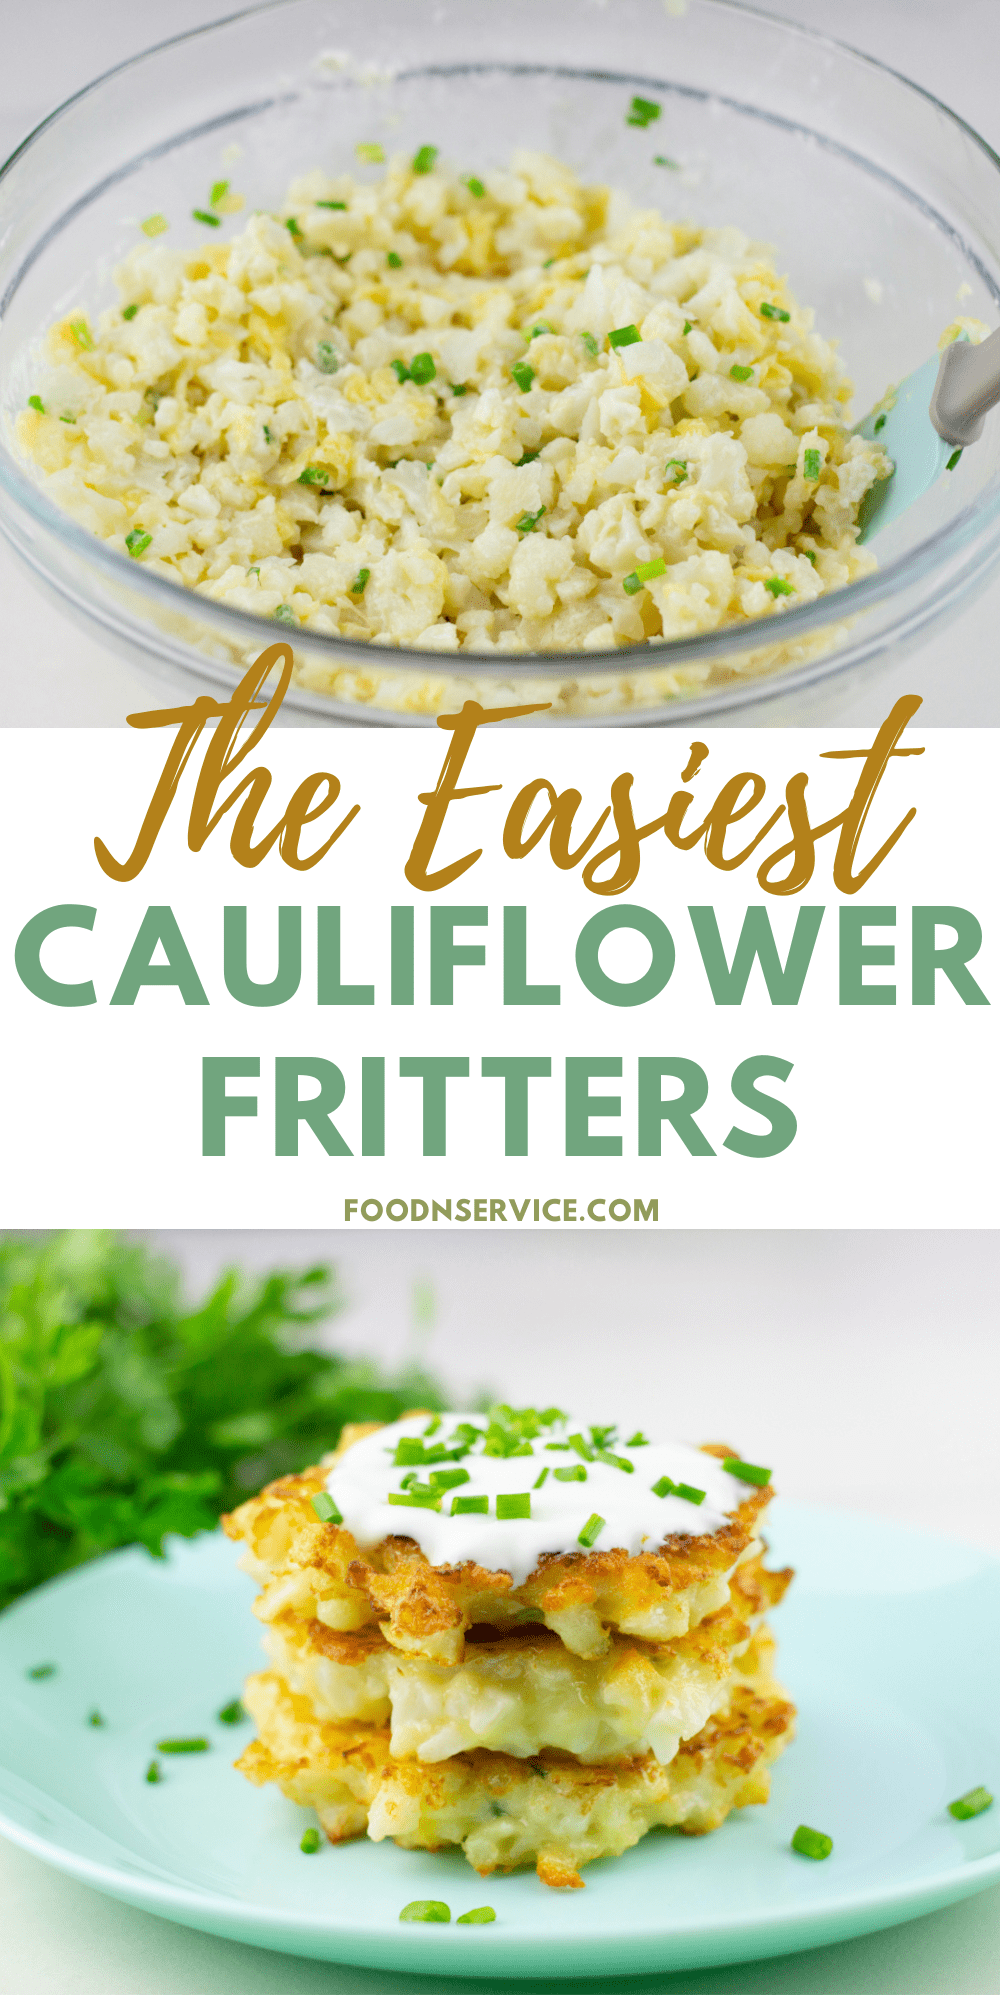 Cauliflower Fritters